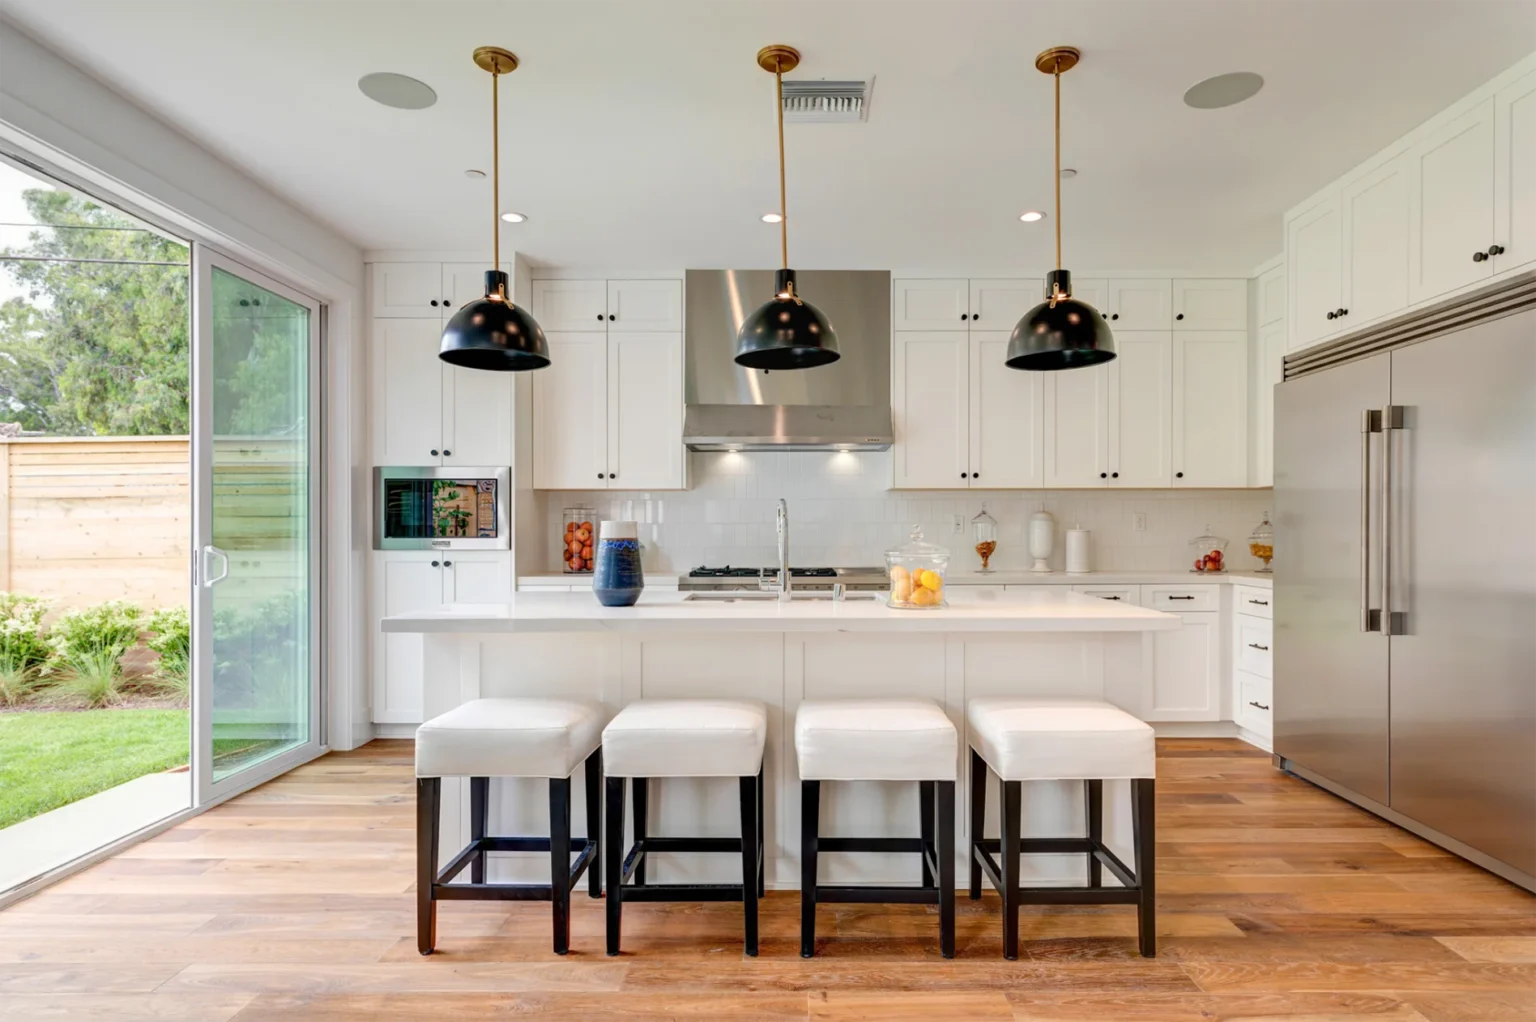 Brentwood Modern Farmhouse kitchen with island, range, countertops